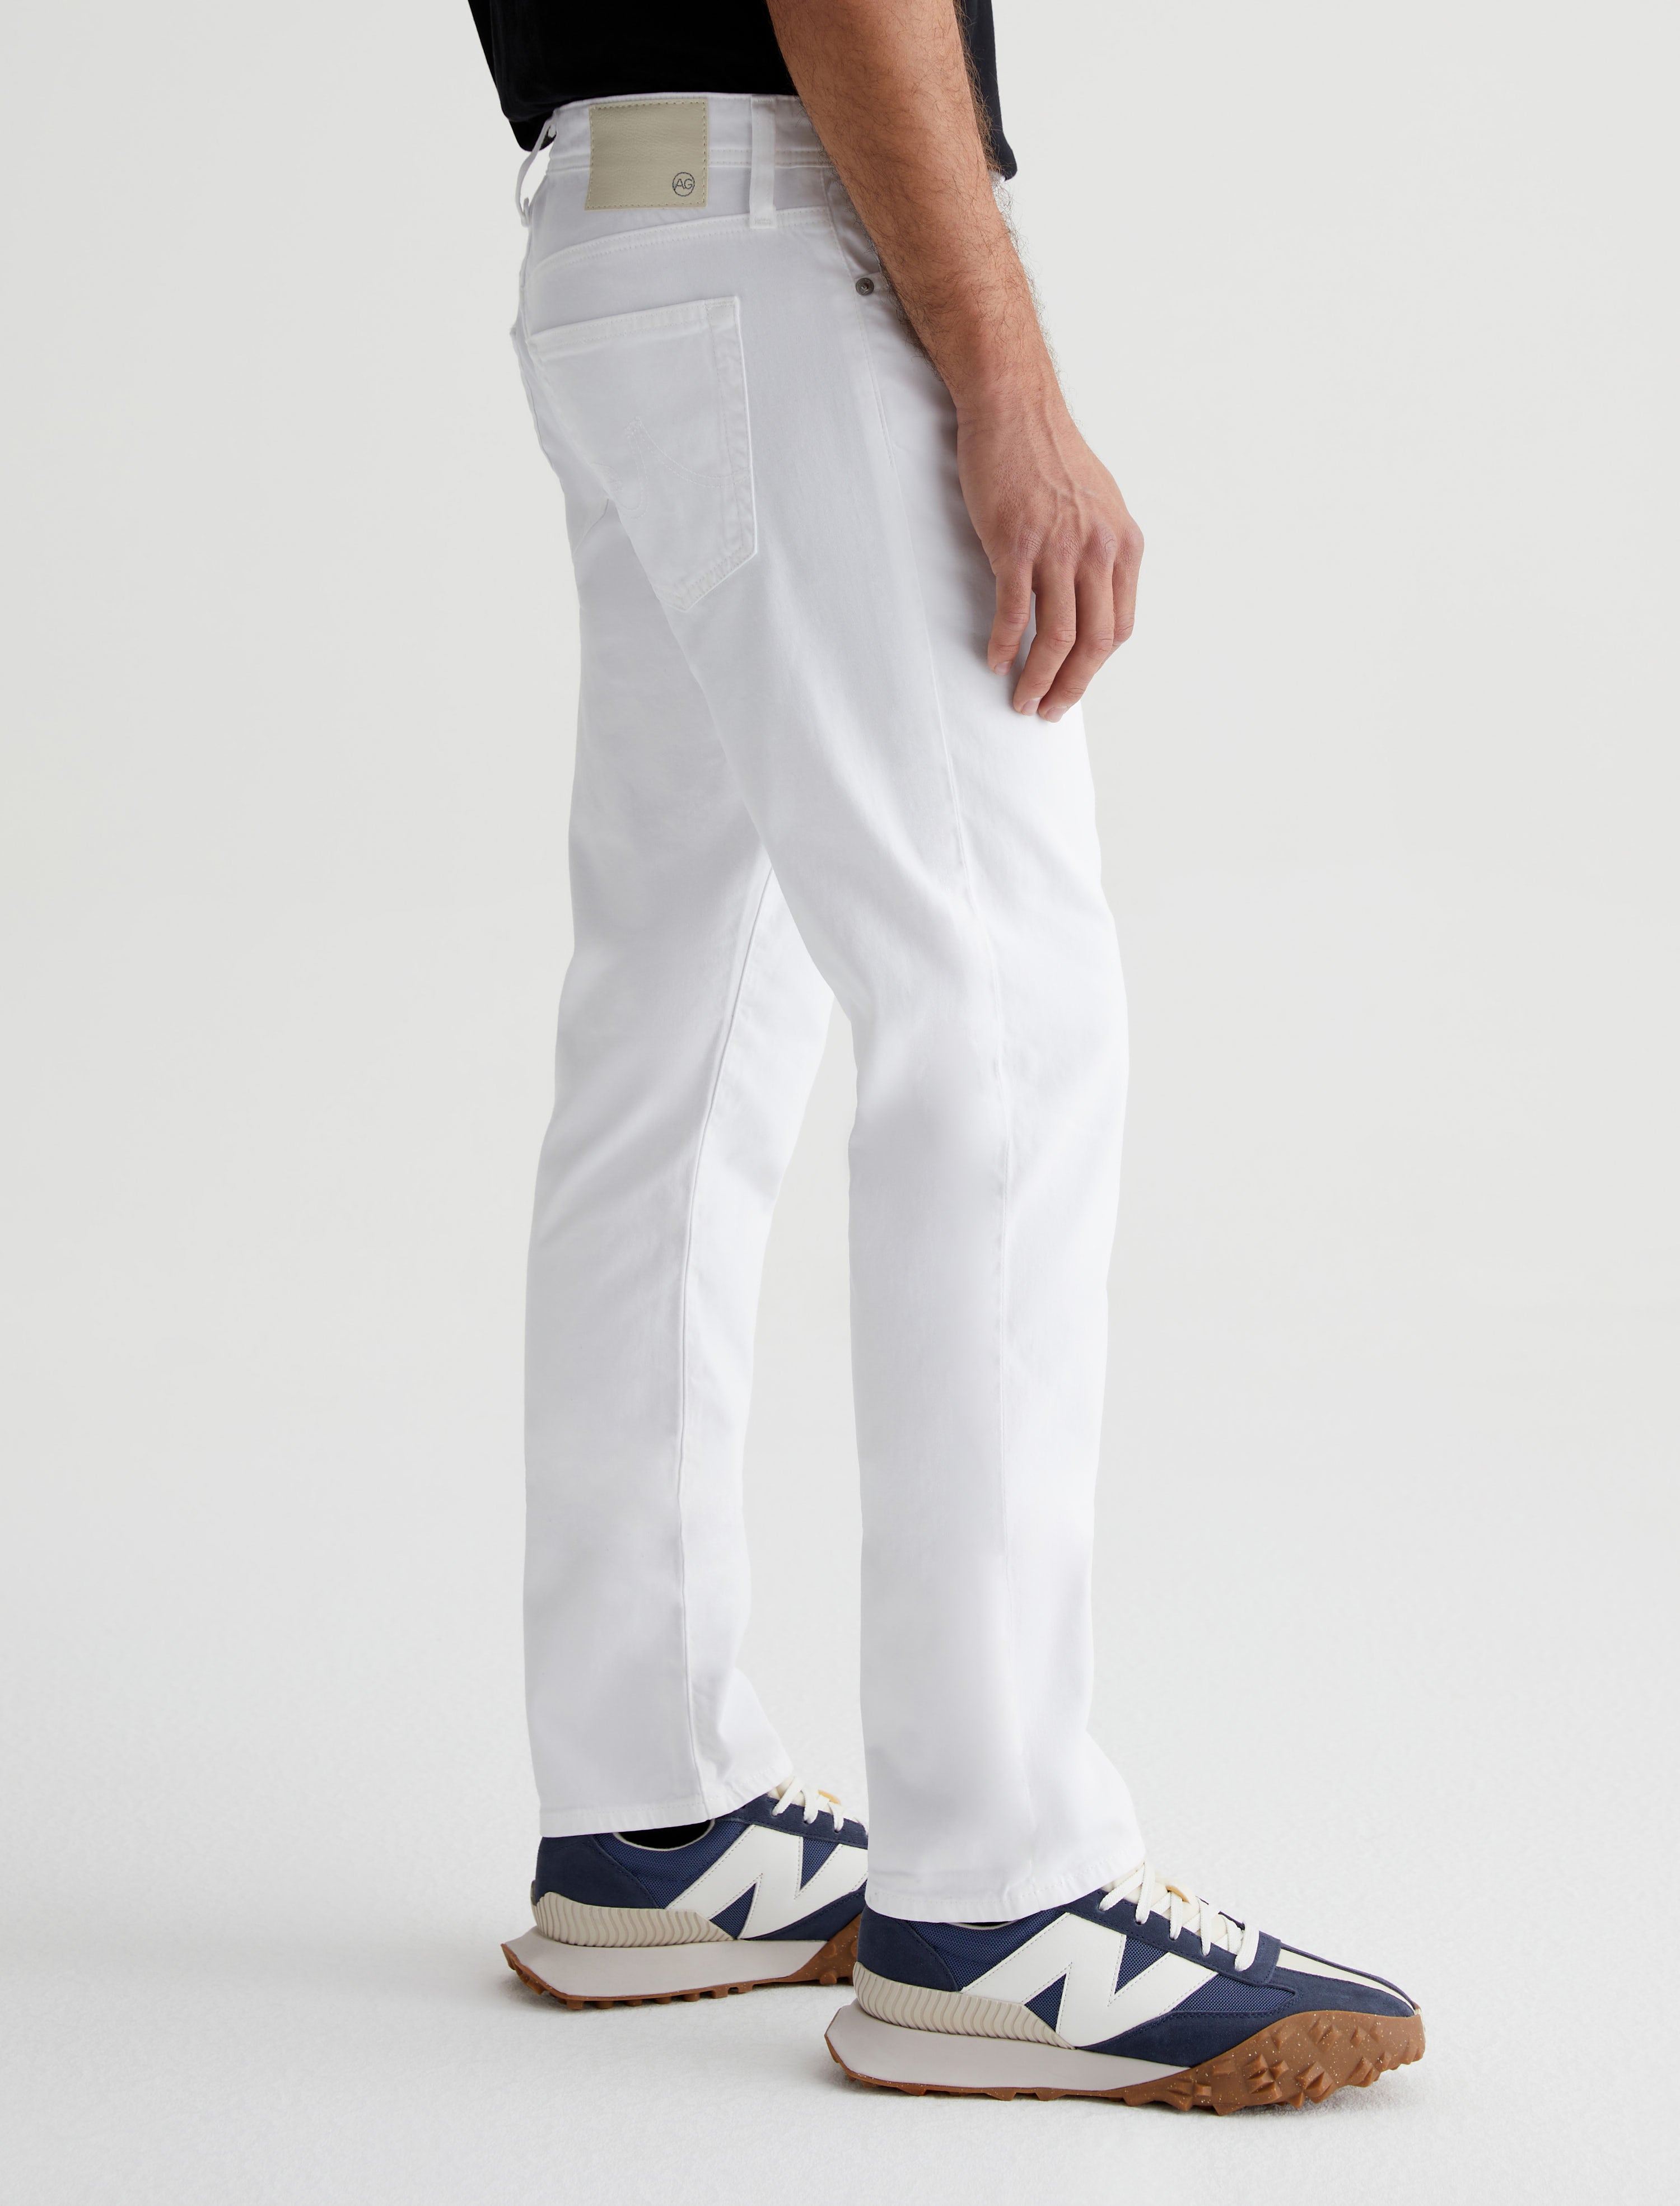 Bare Denim Men Solid Skinny White Jeans - Selling Fast at Pantaloons.com